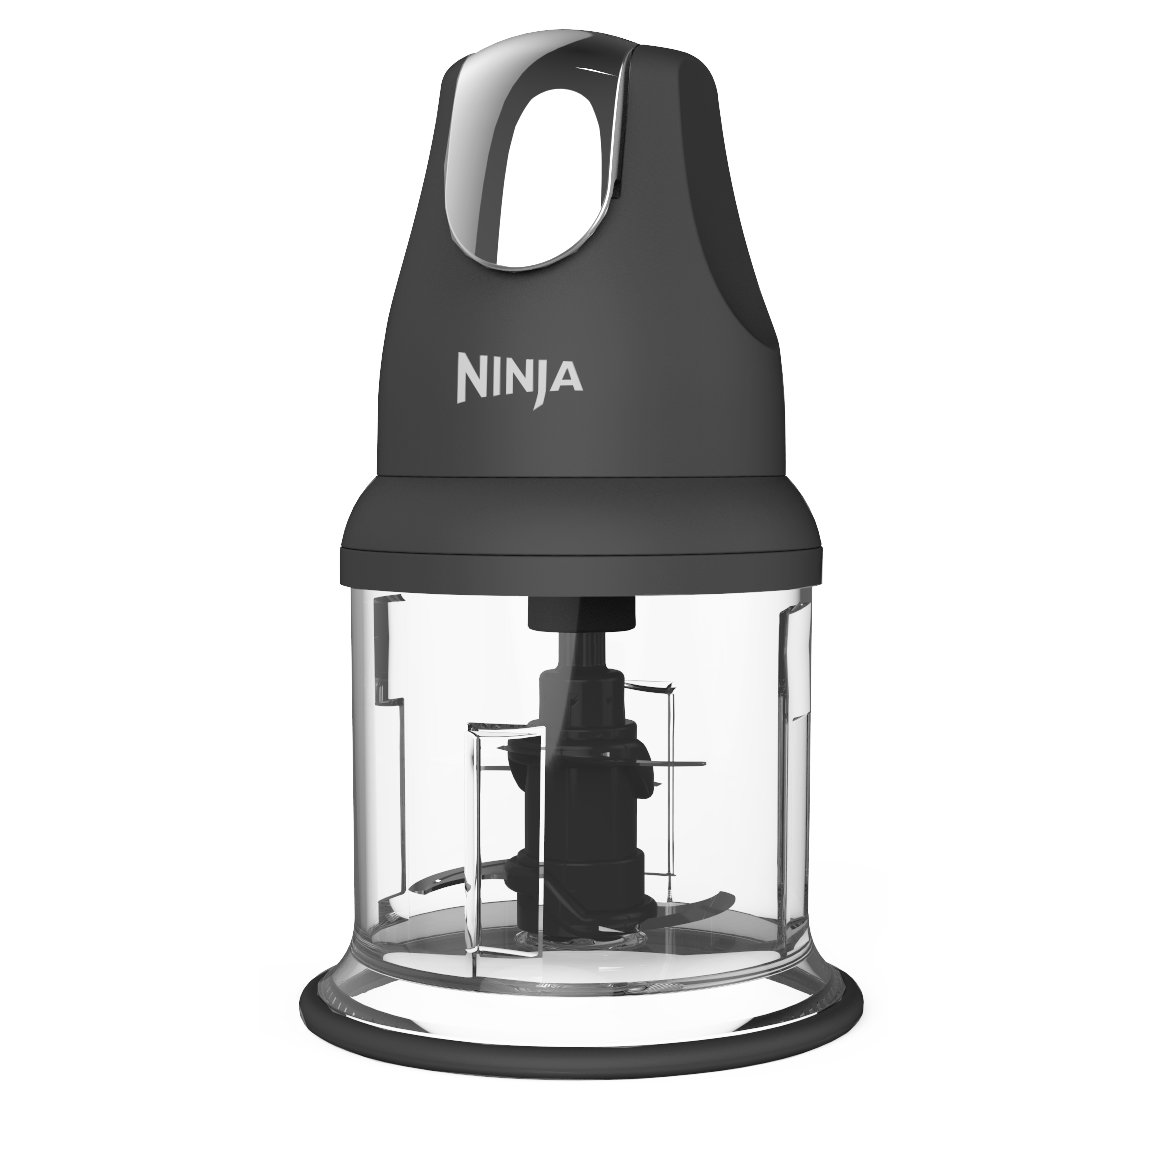 https://www.dontwasteyourmoney.com/wp-content/uploads/2020/01/ninja-food-chopper-and-bowl-2-cup-food-chopper.jpg